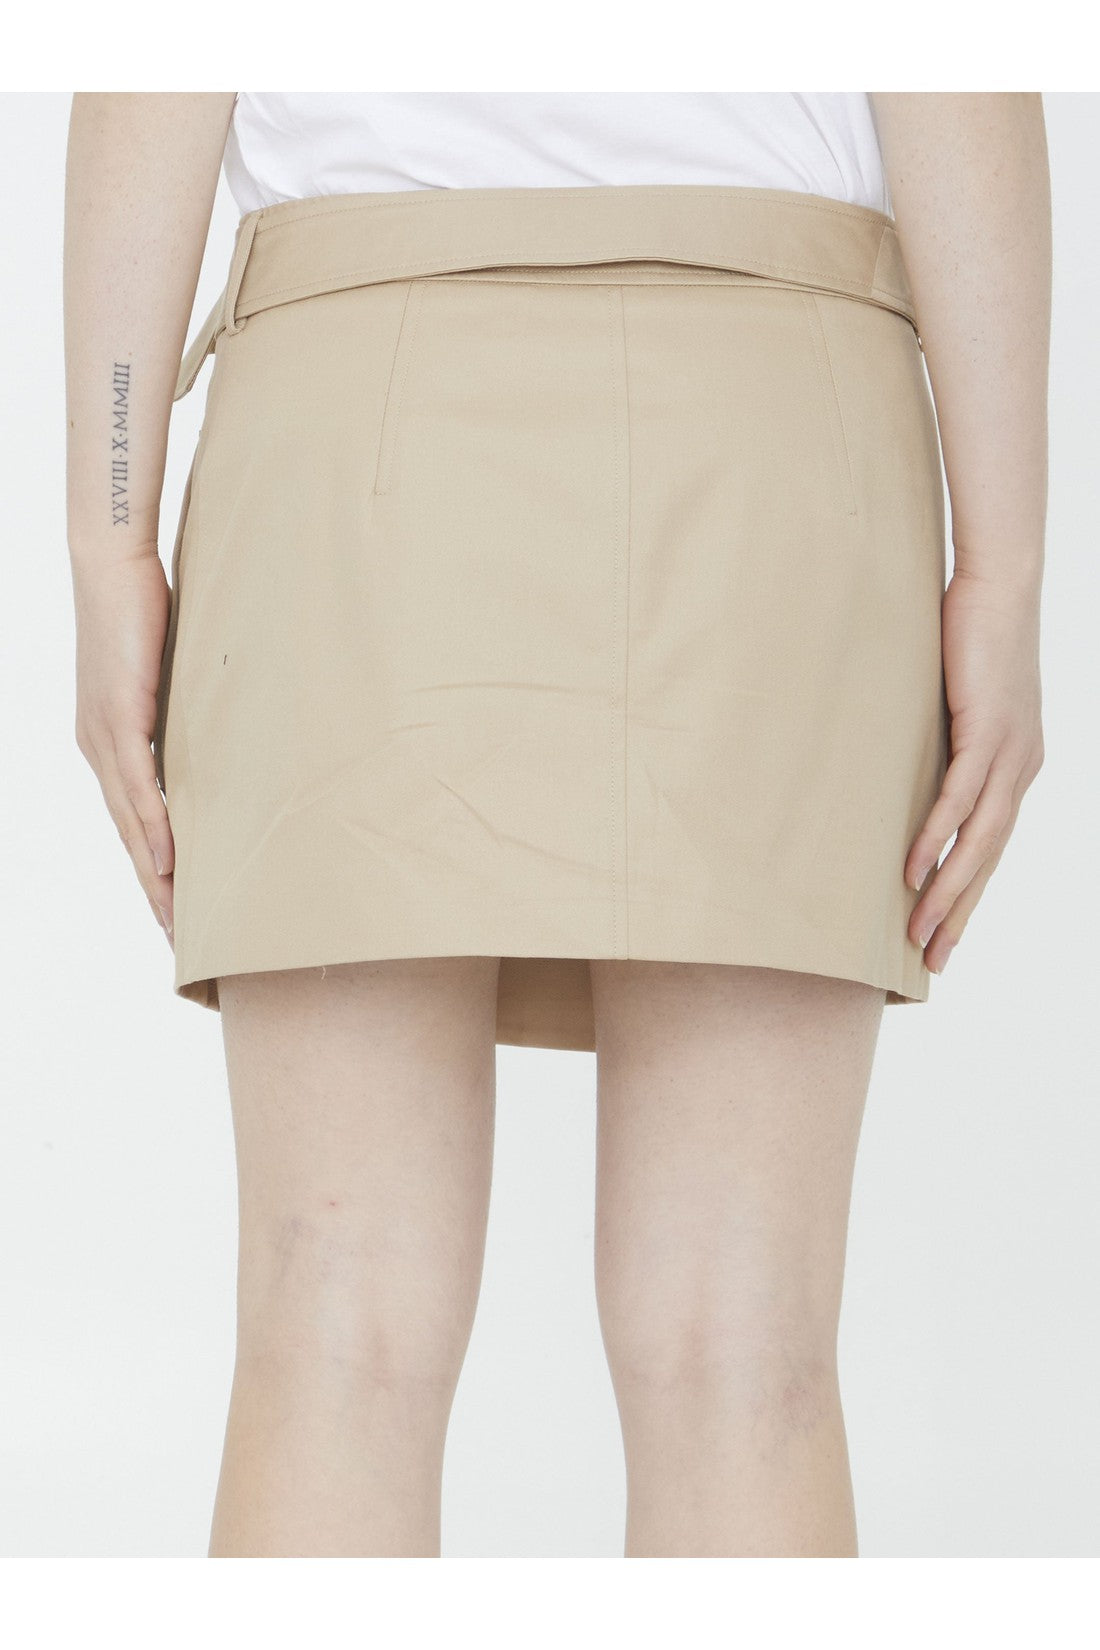 Trench miniskirt